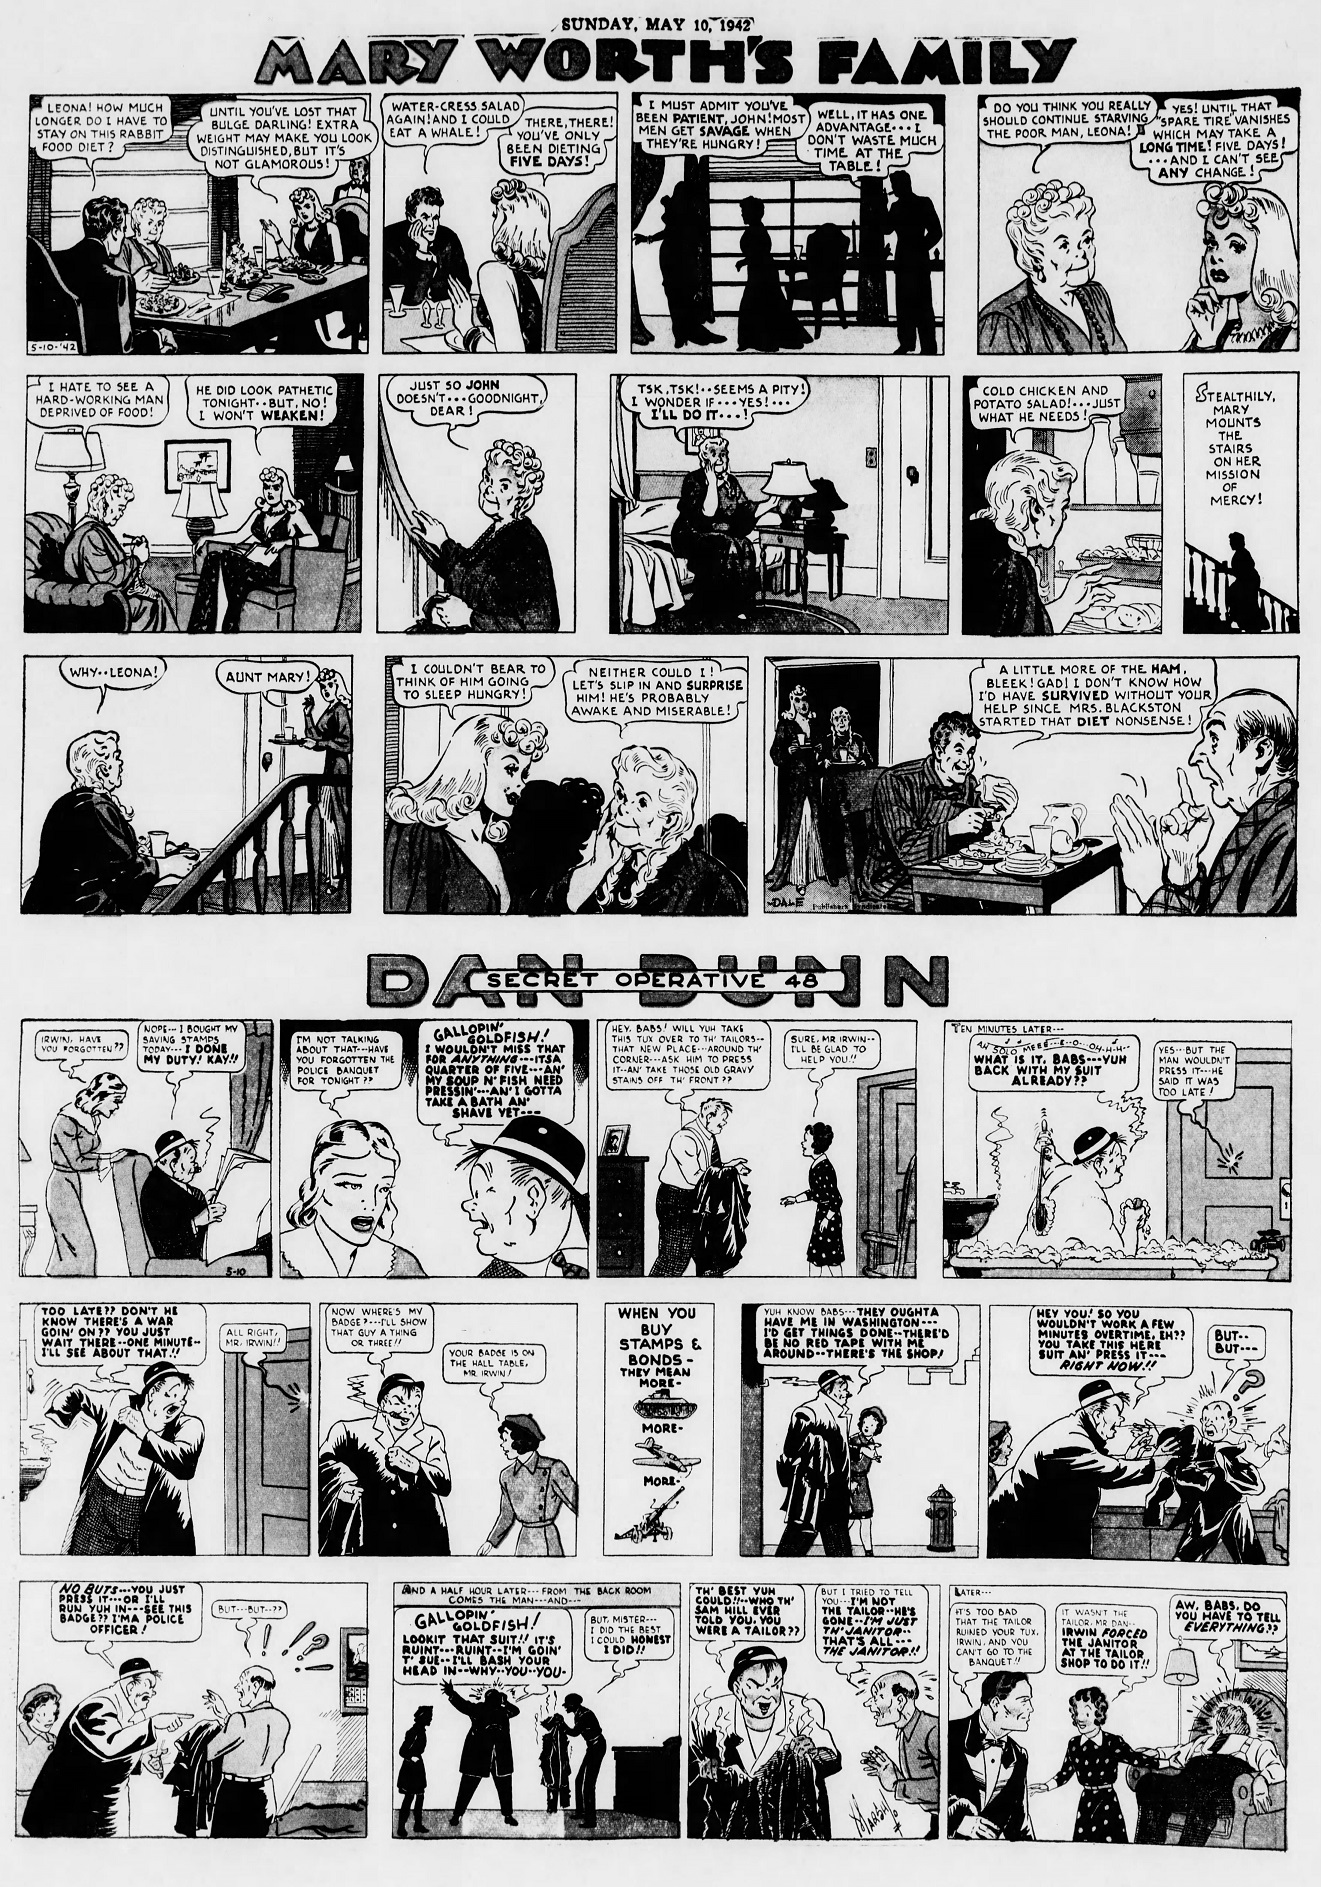 The_Brooklyn_Daily_Eagle_Sun__May_10__1942_(8).jpg